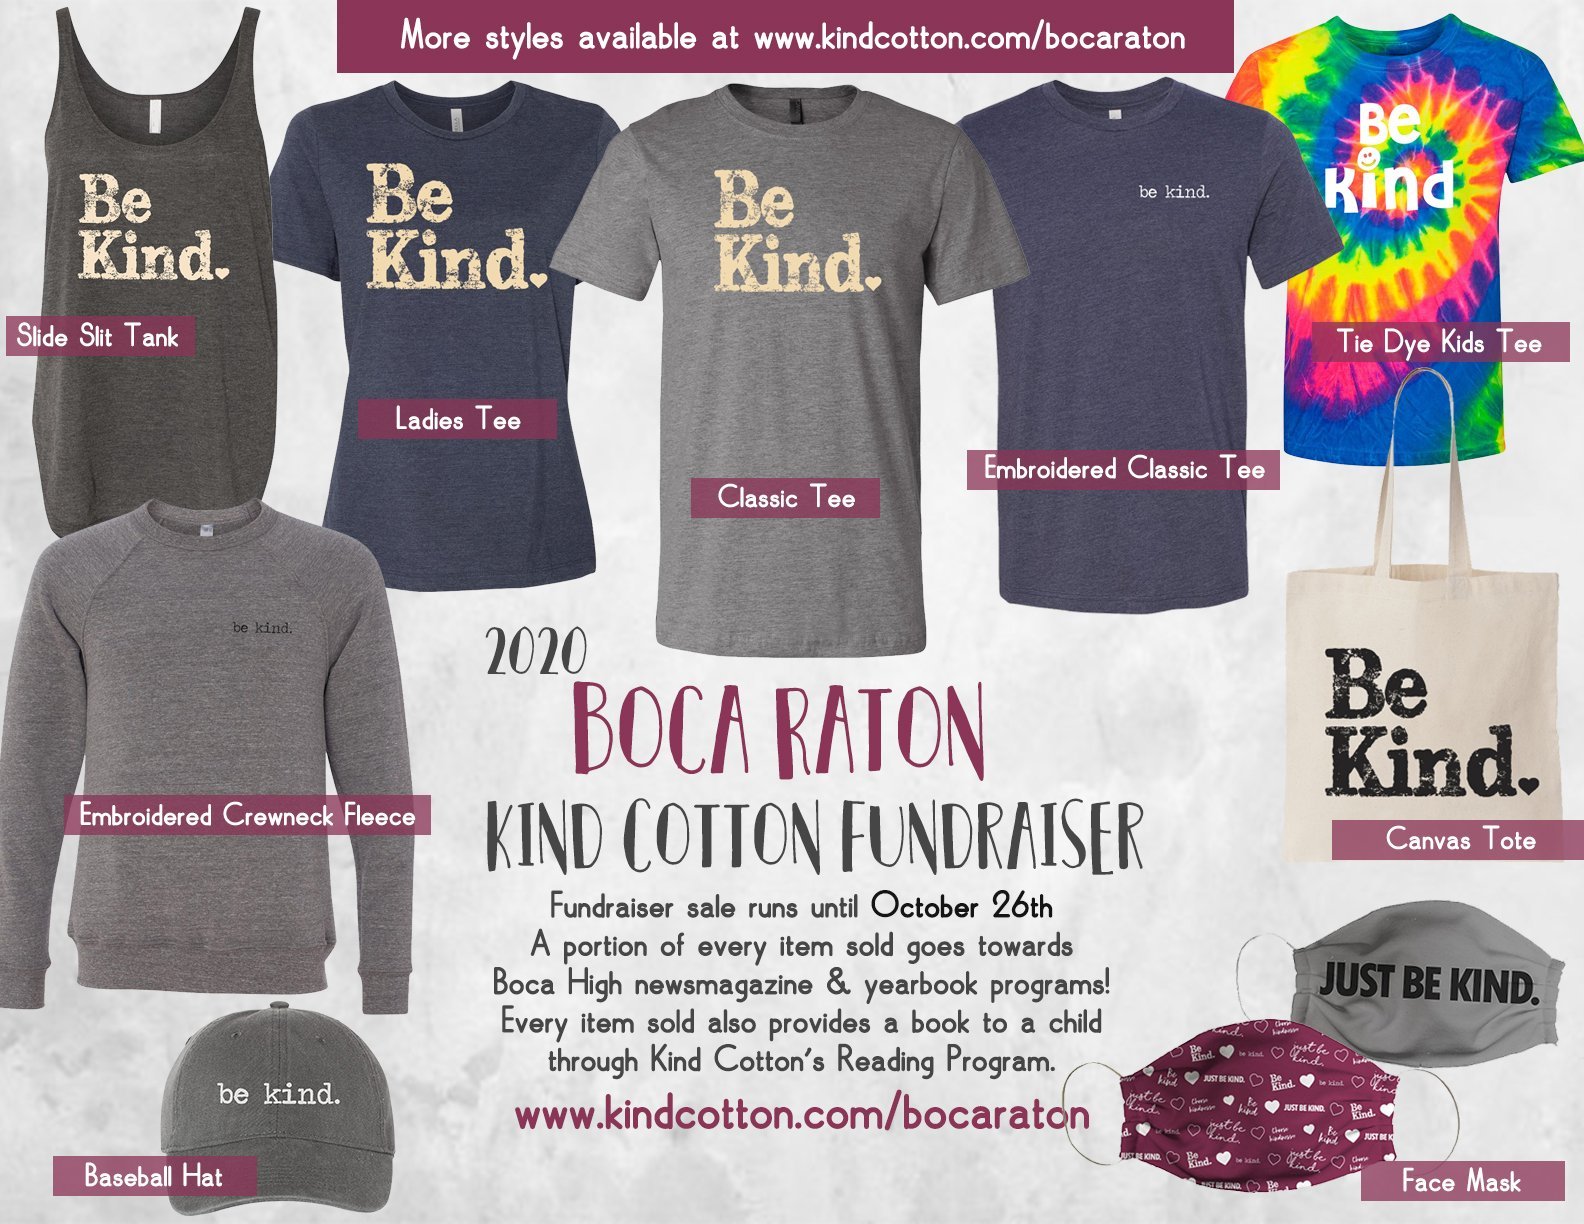 Boca Raton Fundraiser | Kind Cotton